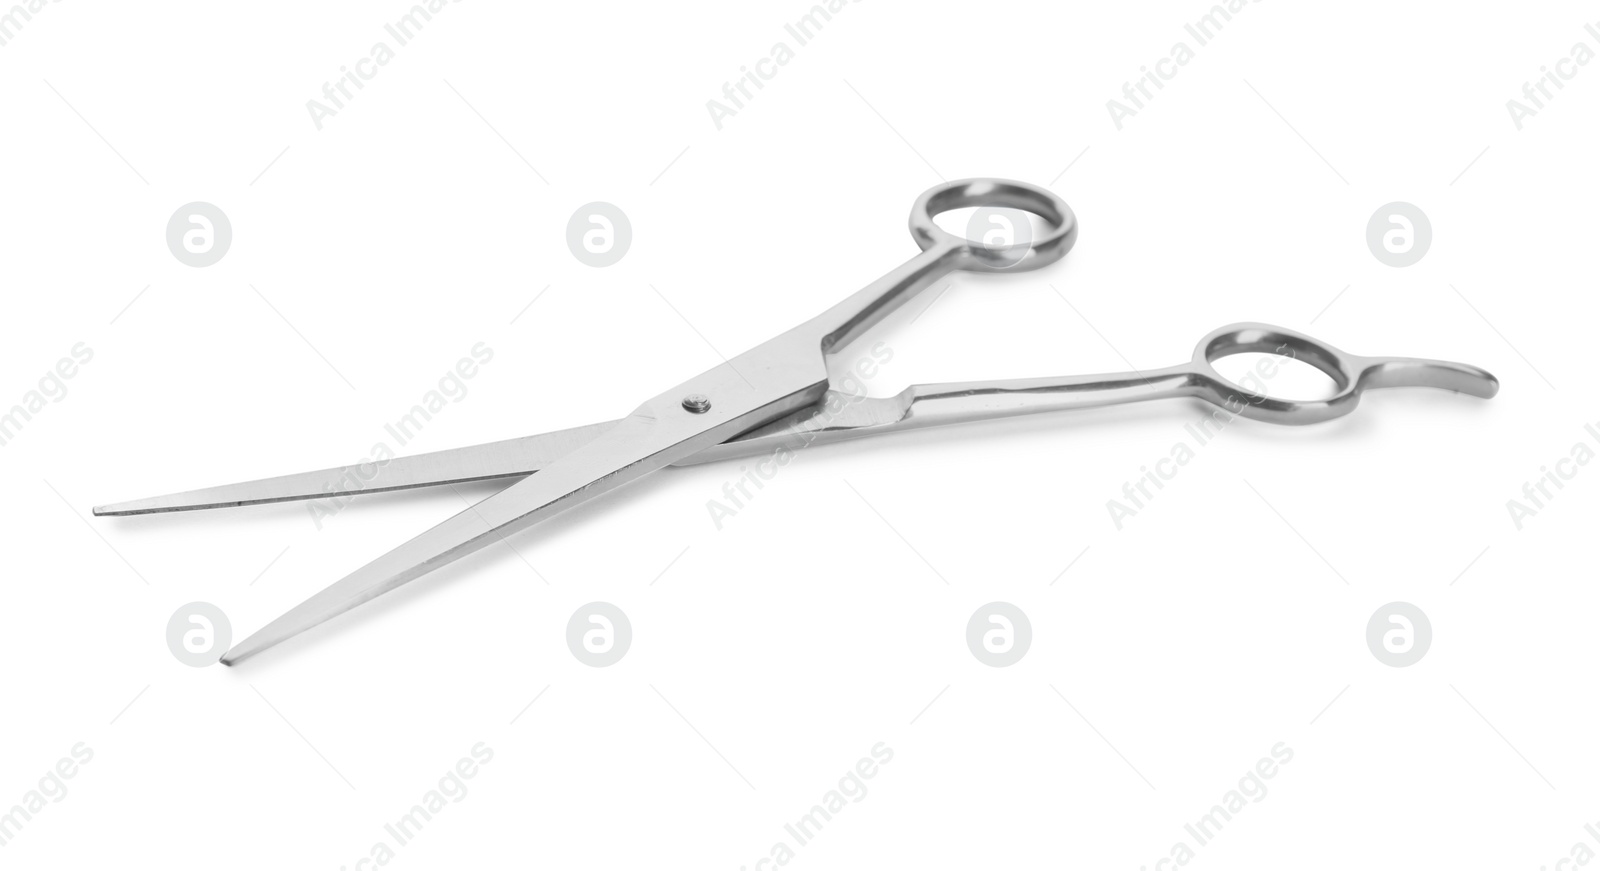 Photo of Pair of sharp hairdresser's scissors on white background